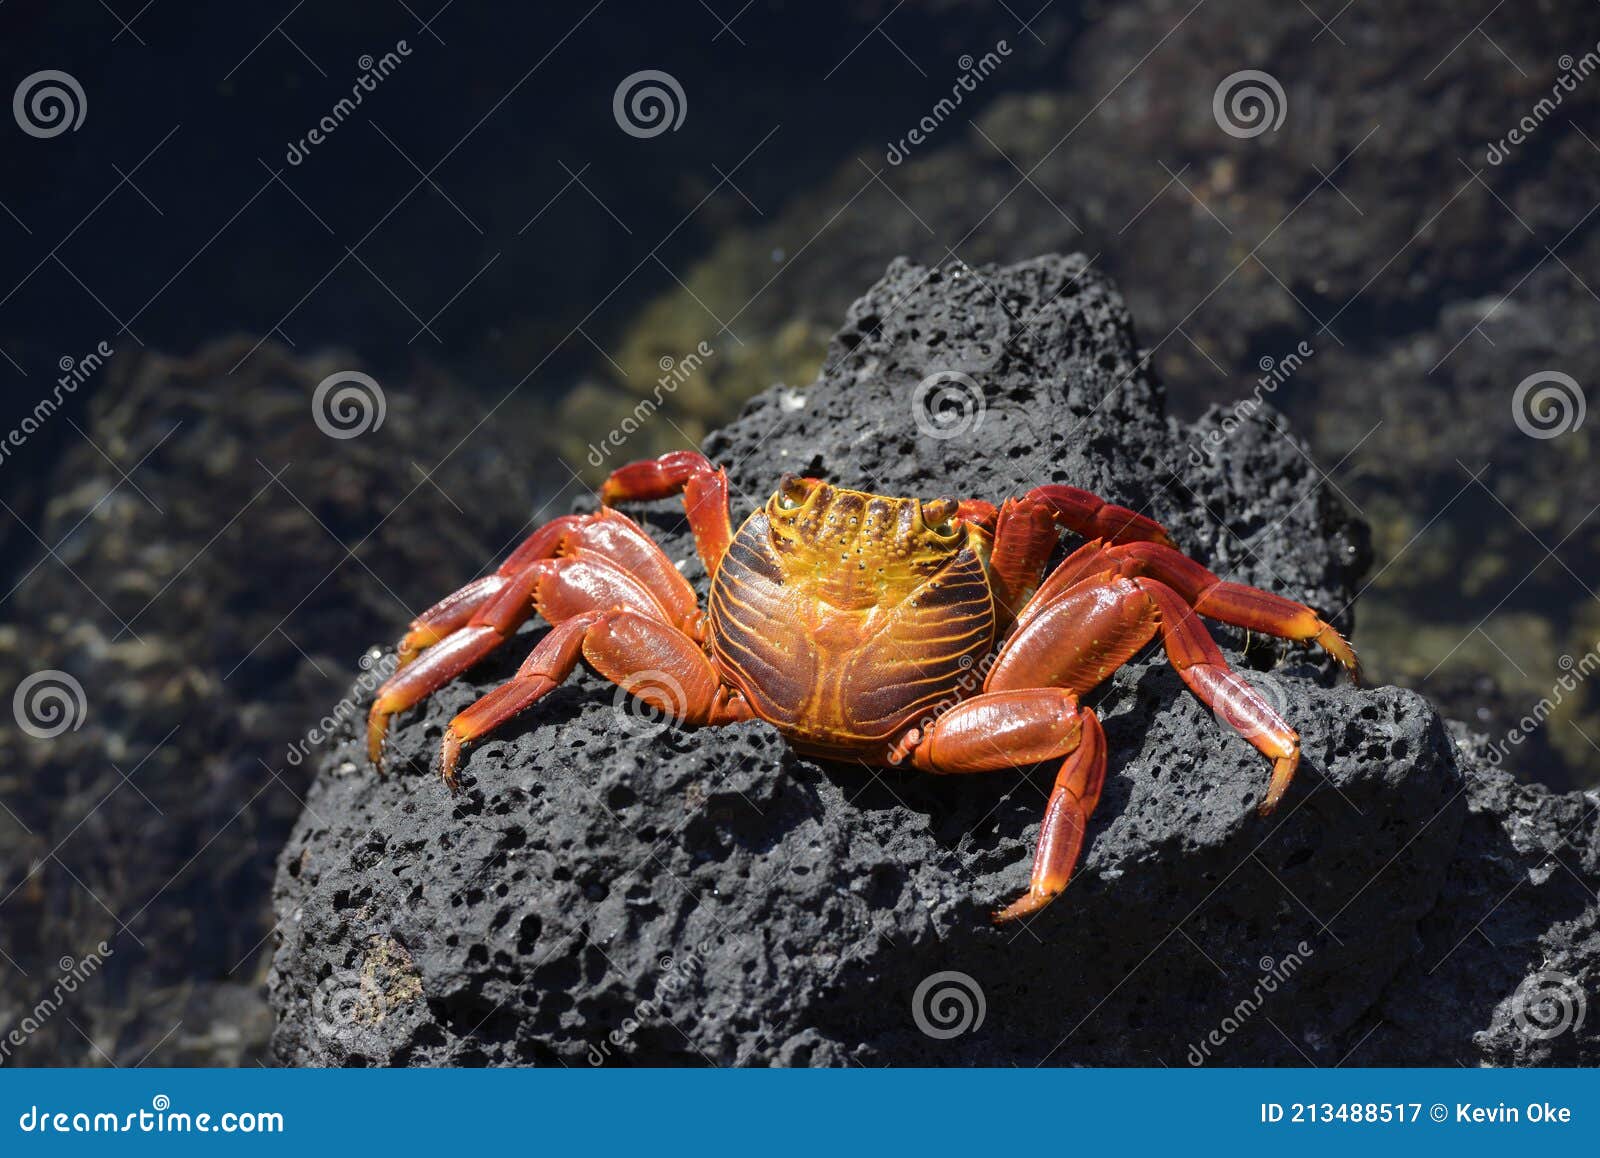 sally lightfoot crab, grapsus grapsus, santa cruz island